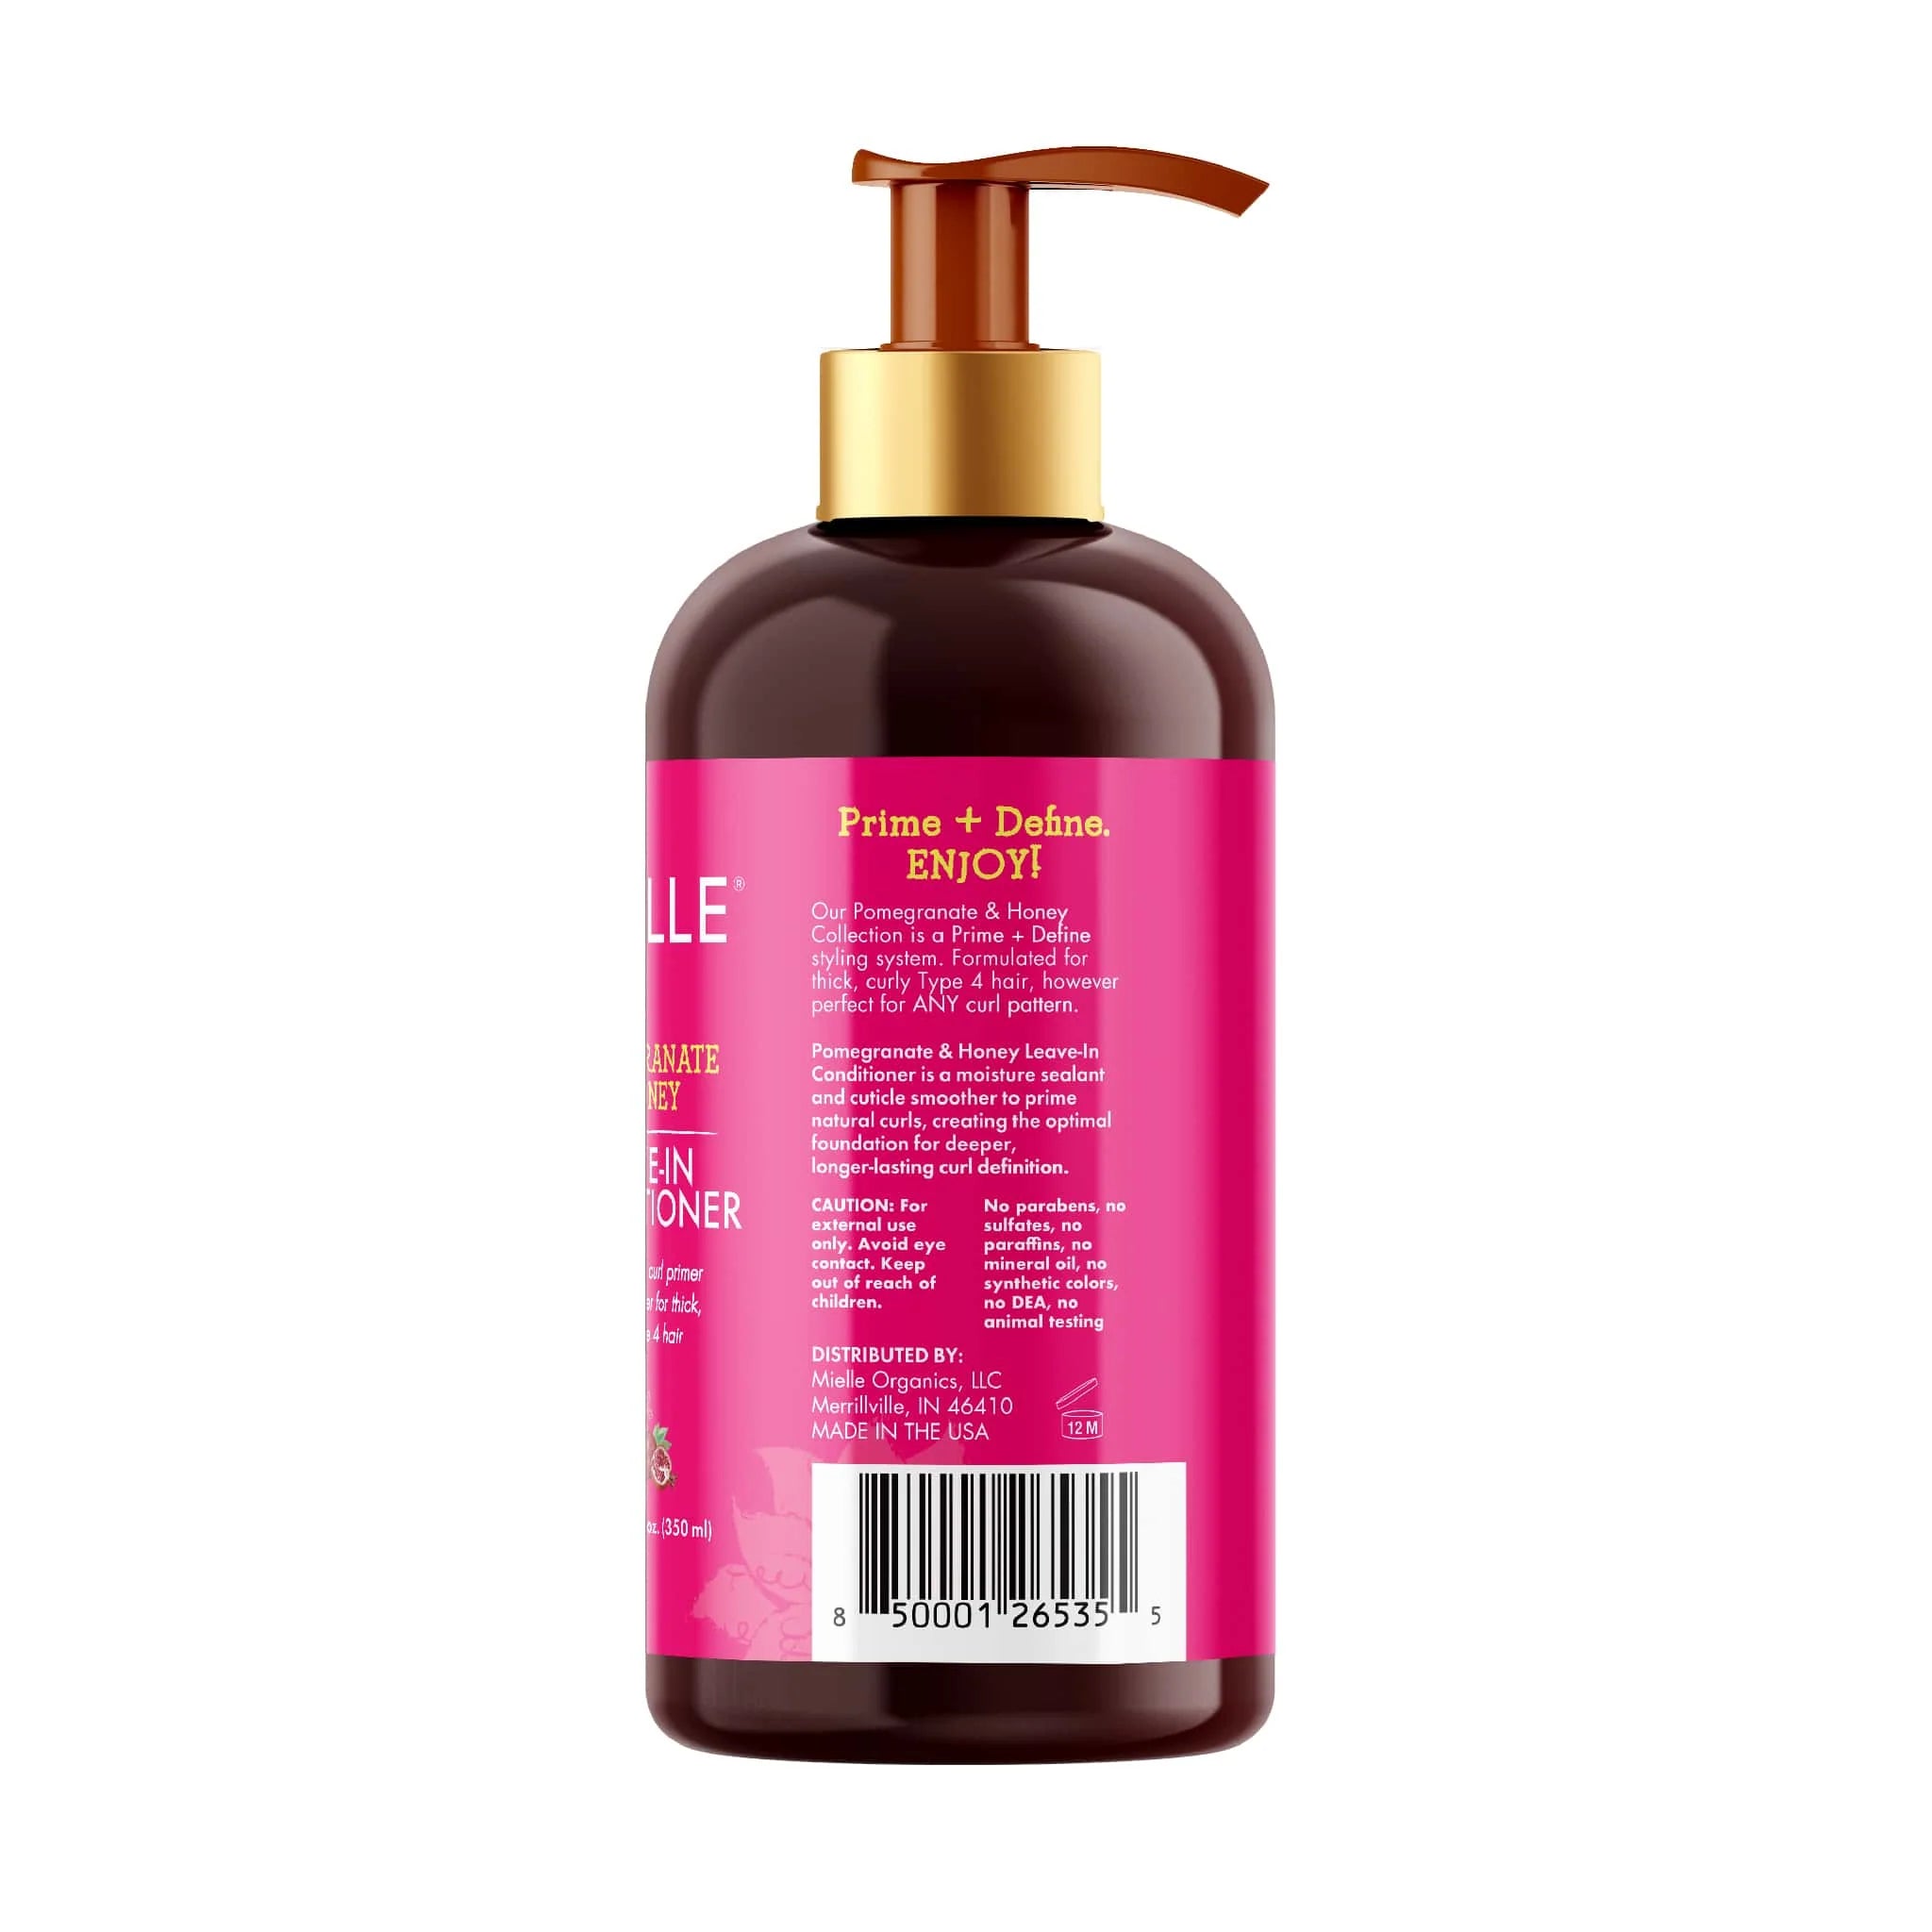 Mielle Organics Pomegranate & Honey Après-shampoing sans Rinçage